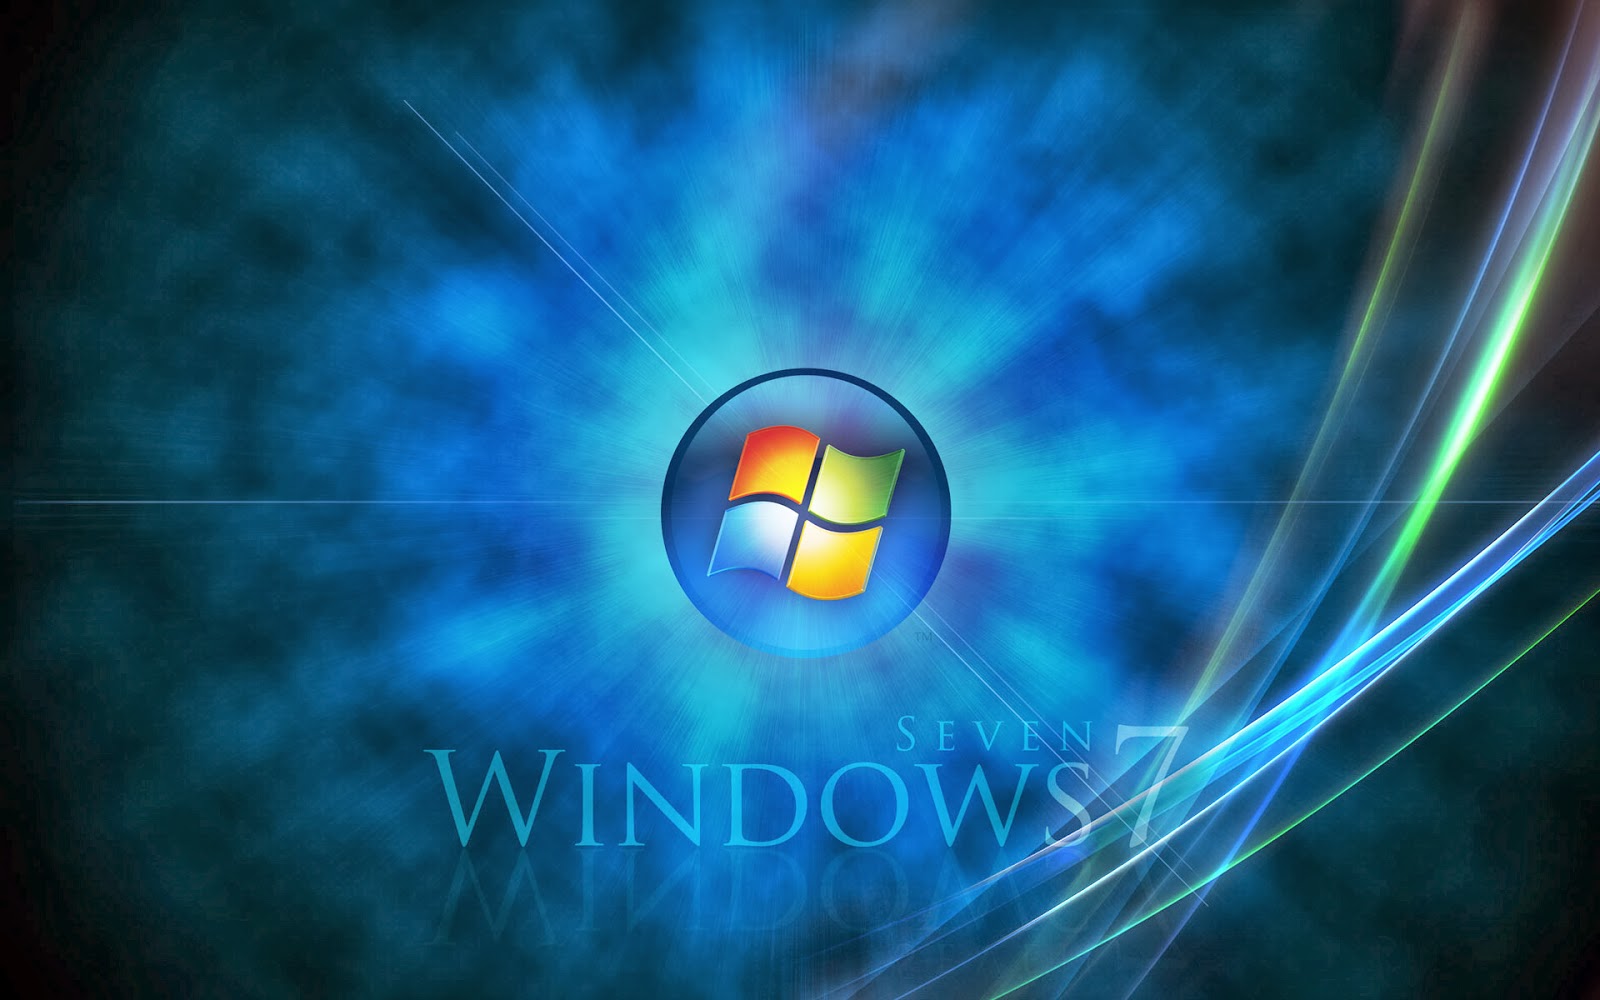 Windows 7 Wallpapers | The Best Desktop HD Wallpapers